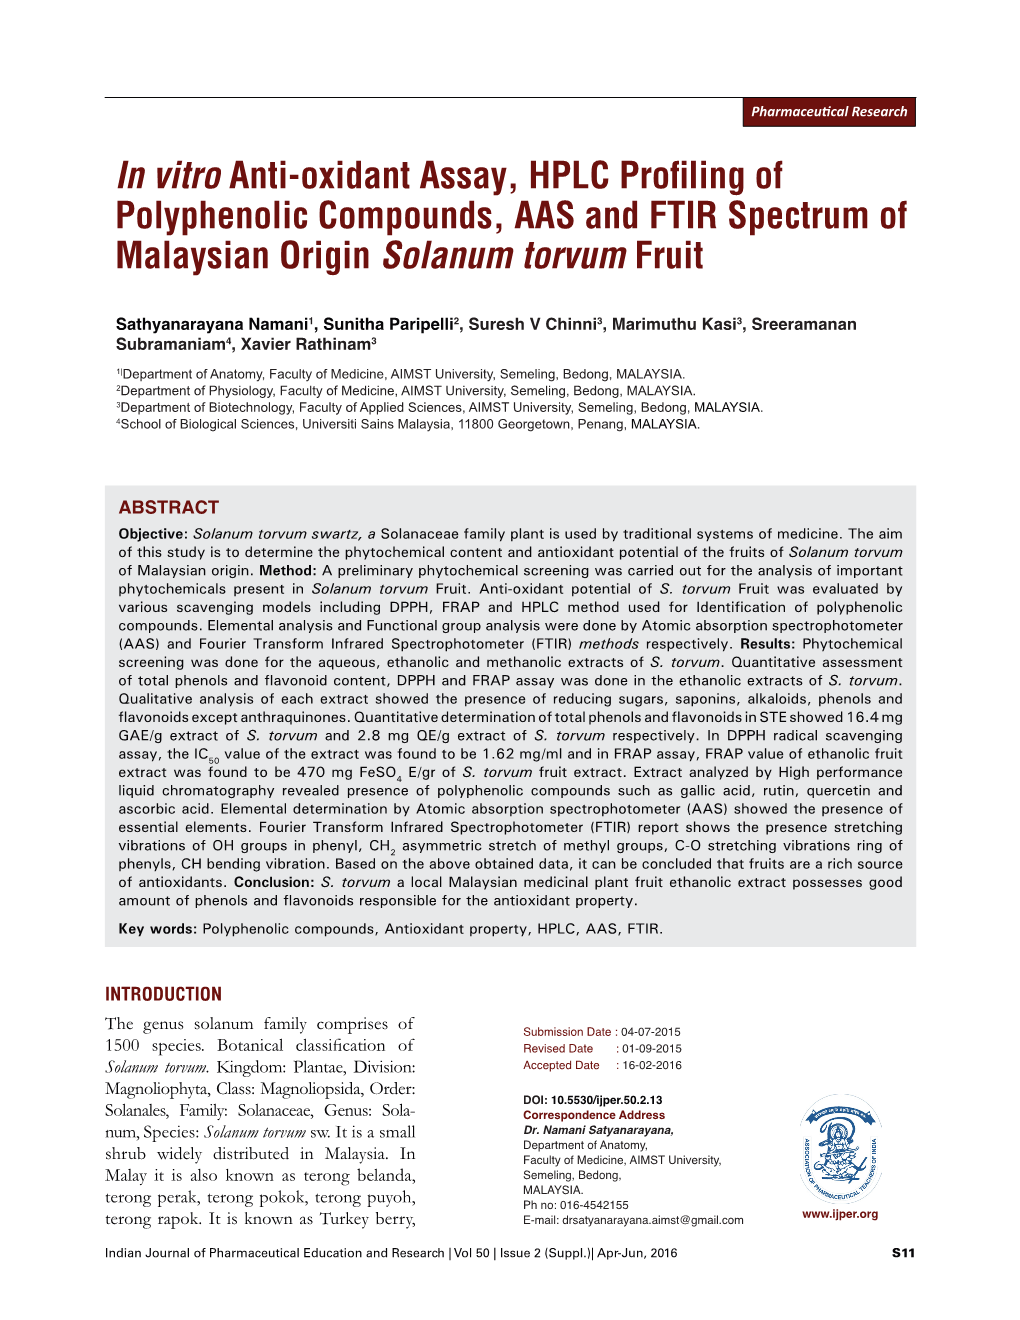 In Vitro Anti-Oxidant Assay, HPLC Profiling of Polyphenolic Compounds, AAS and FTIR Spectrum of Malaysian Origin Solanum Torvum Fruit